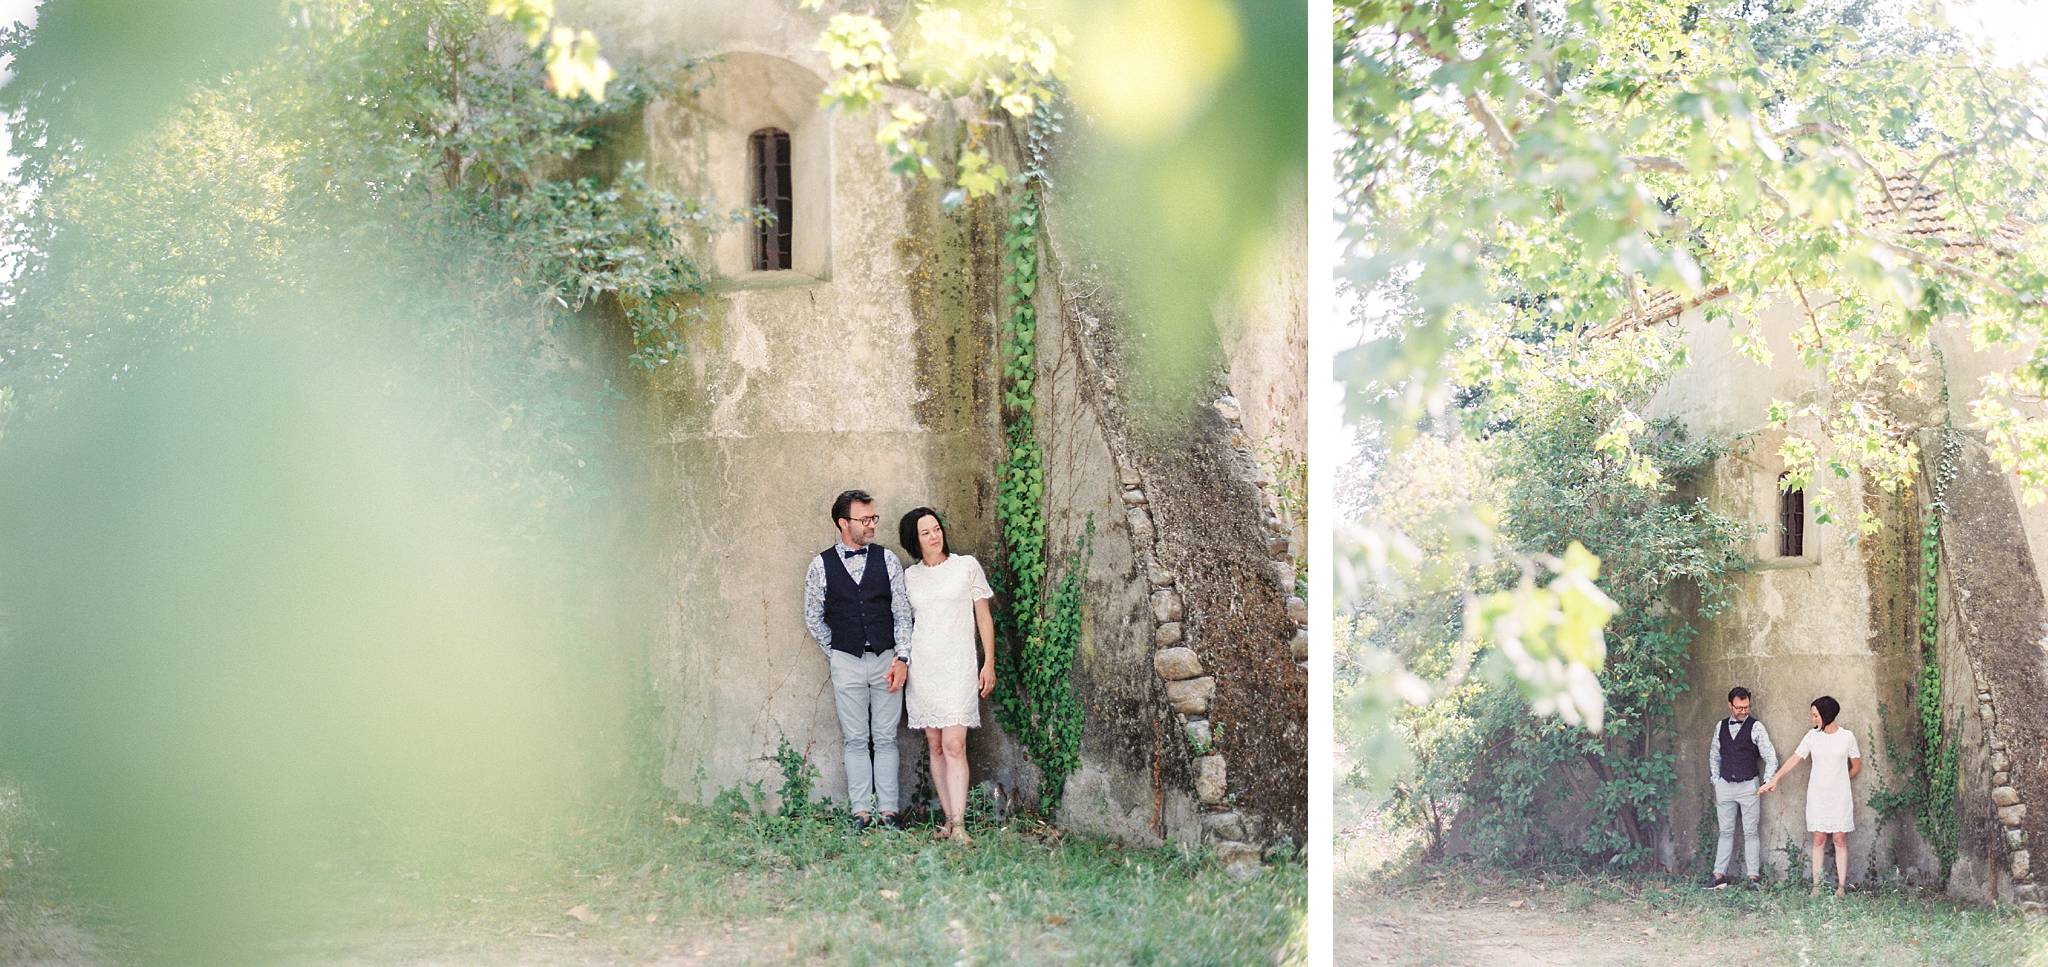 Mariage au château de Villeclare - Hugo Hennequin Photographe Perpignan Sud de France - Laeti + David-0099.jpg